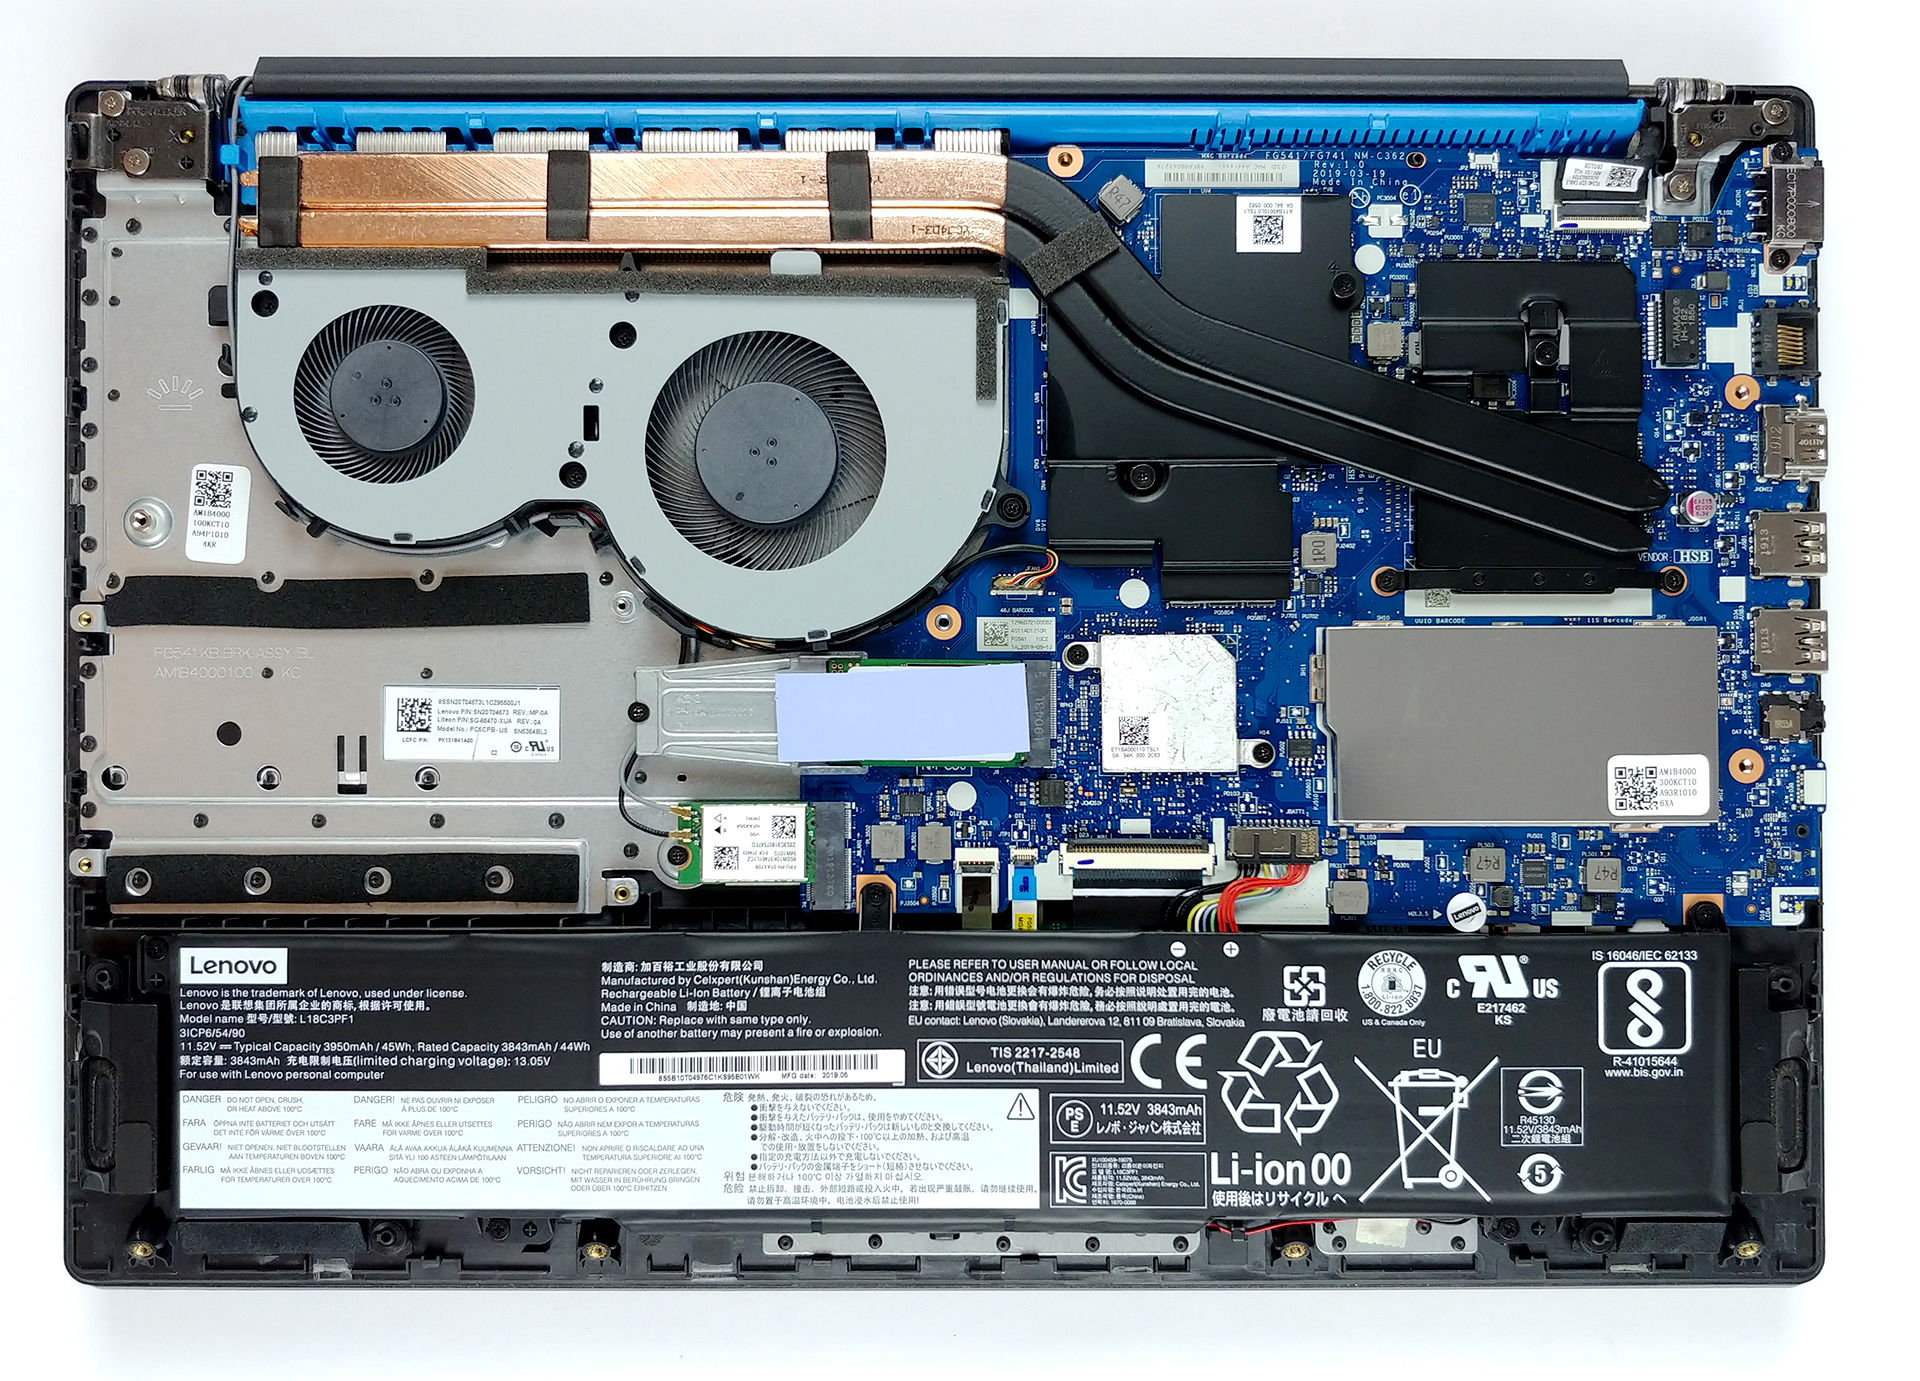 Inside Lenovo L340 Gaming (15") - disassembly and upgrade options | LaptopMedia.com